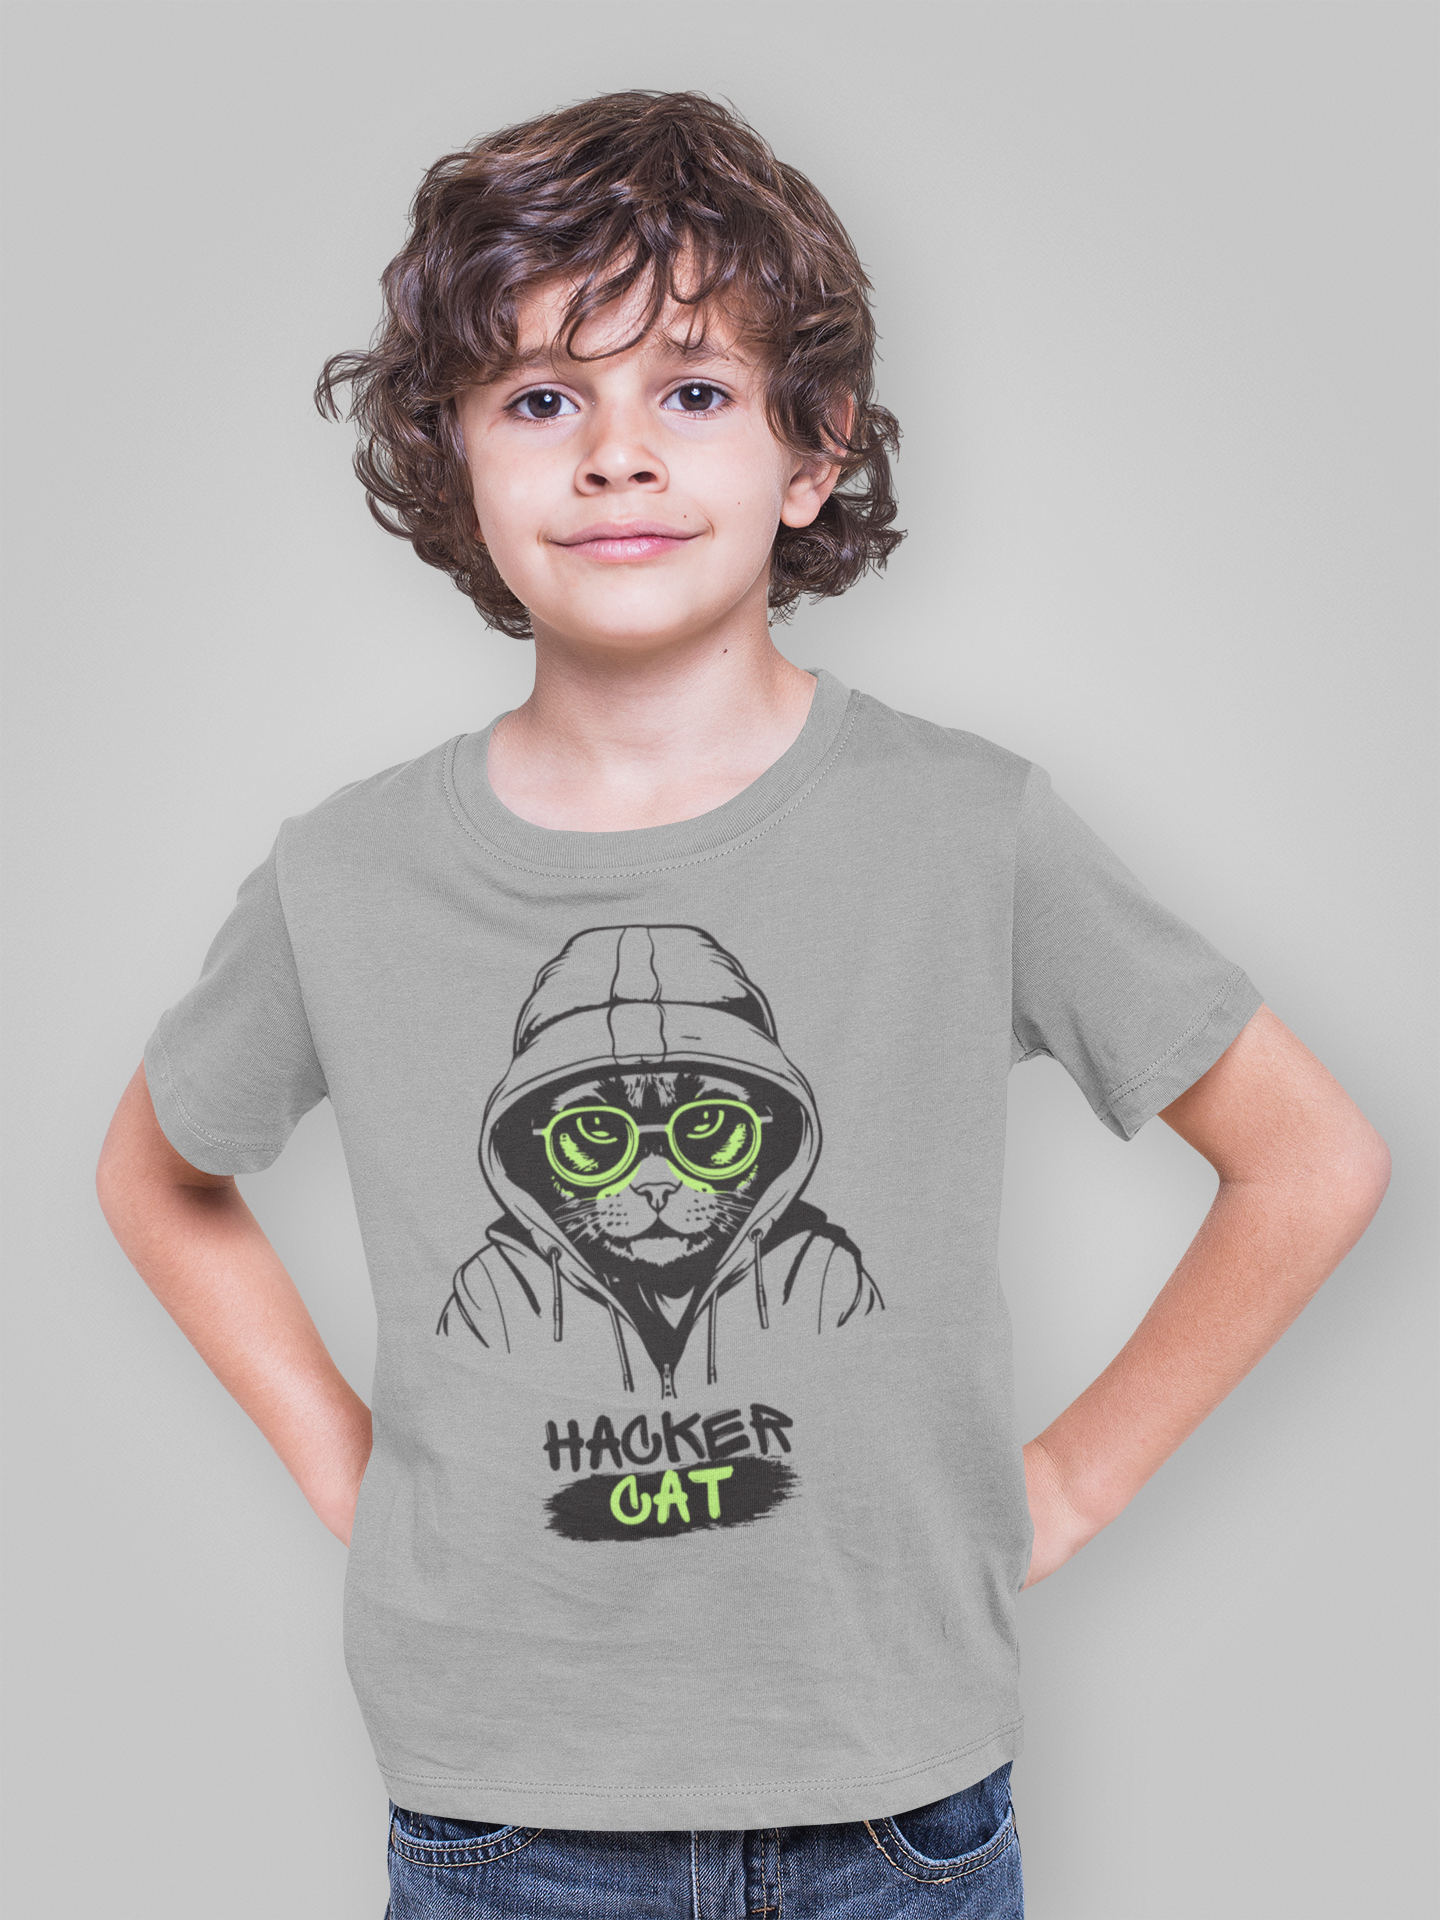 Hacker Cat Kid's T-Shirt